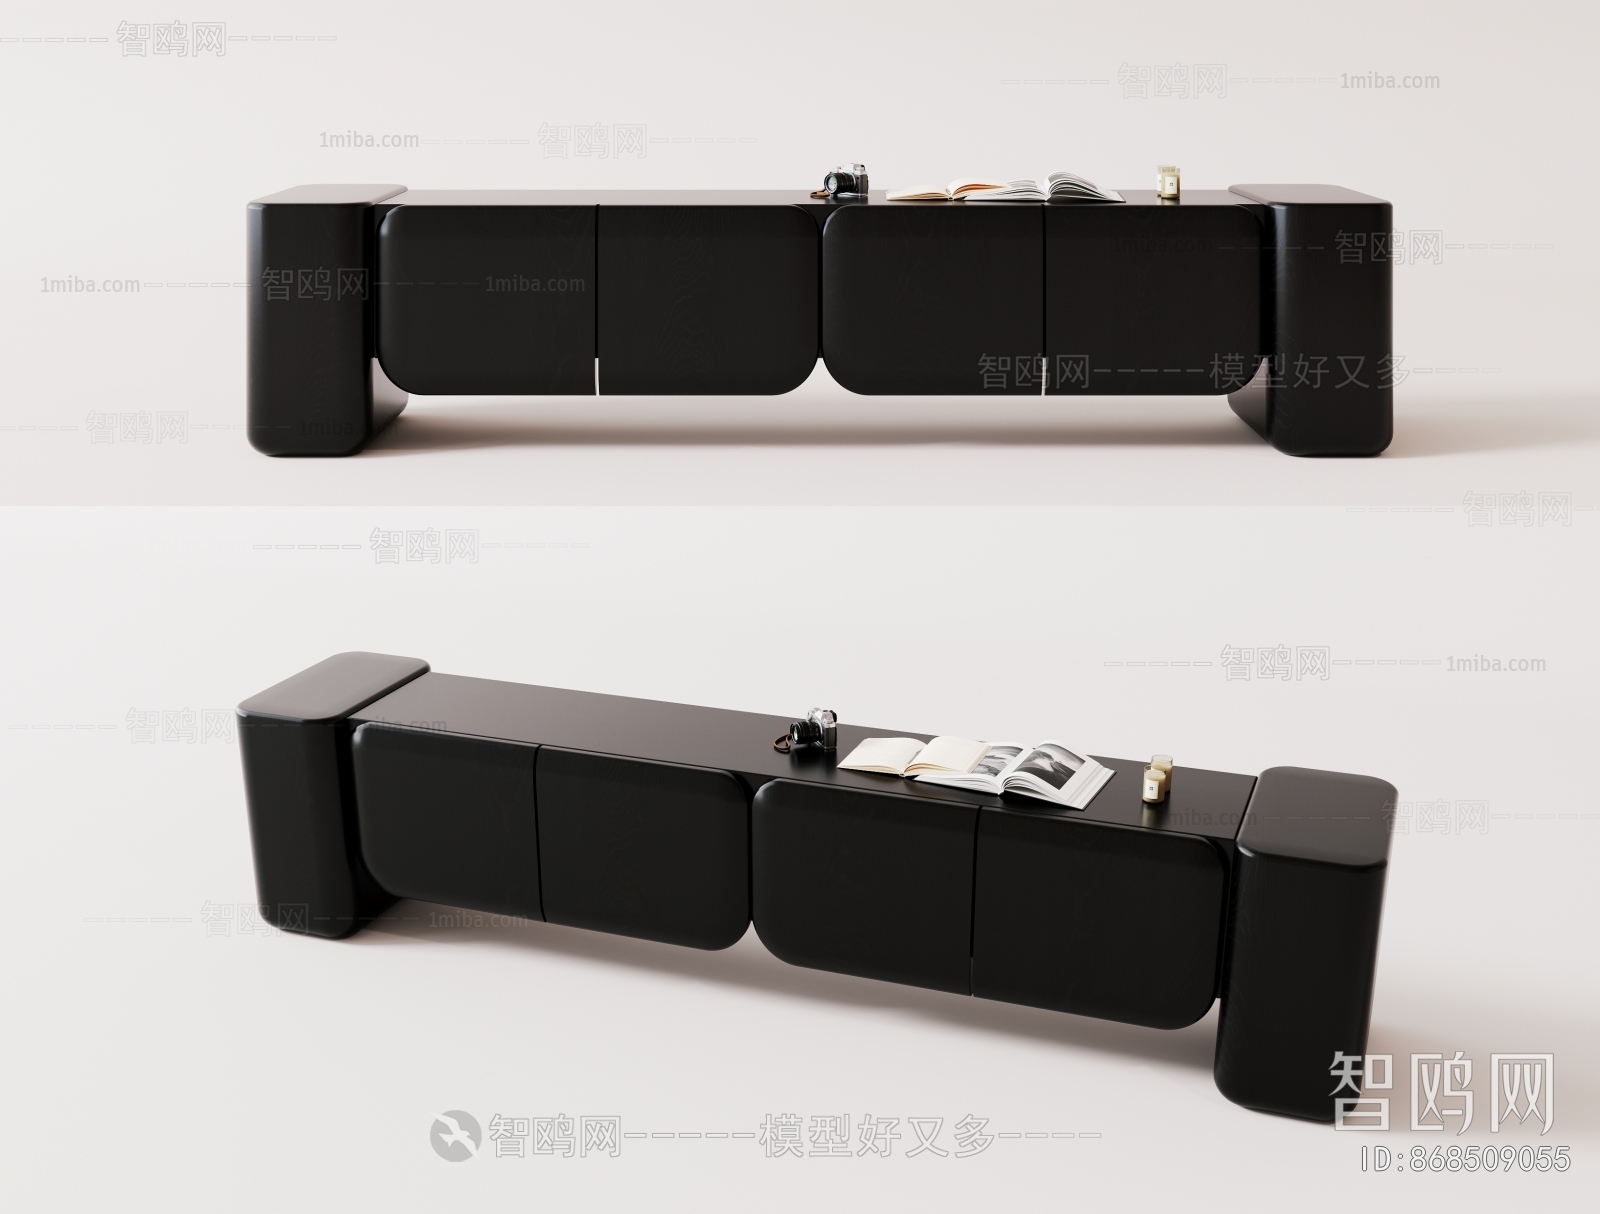 Wabi-sabi Style TV Cabinet